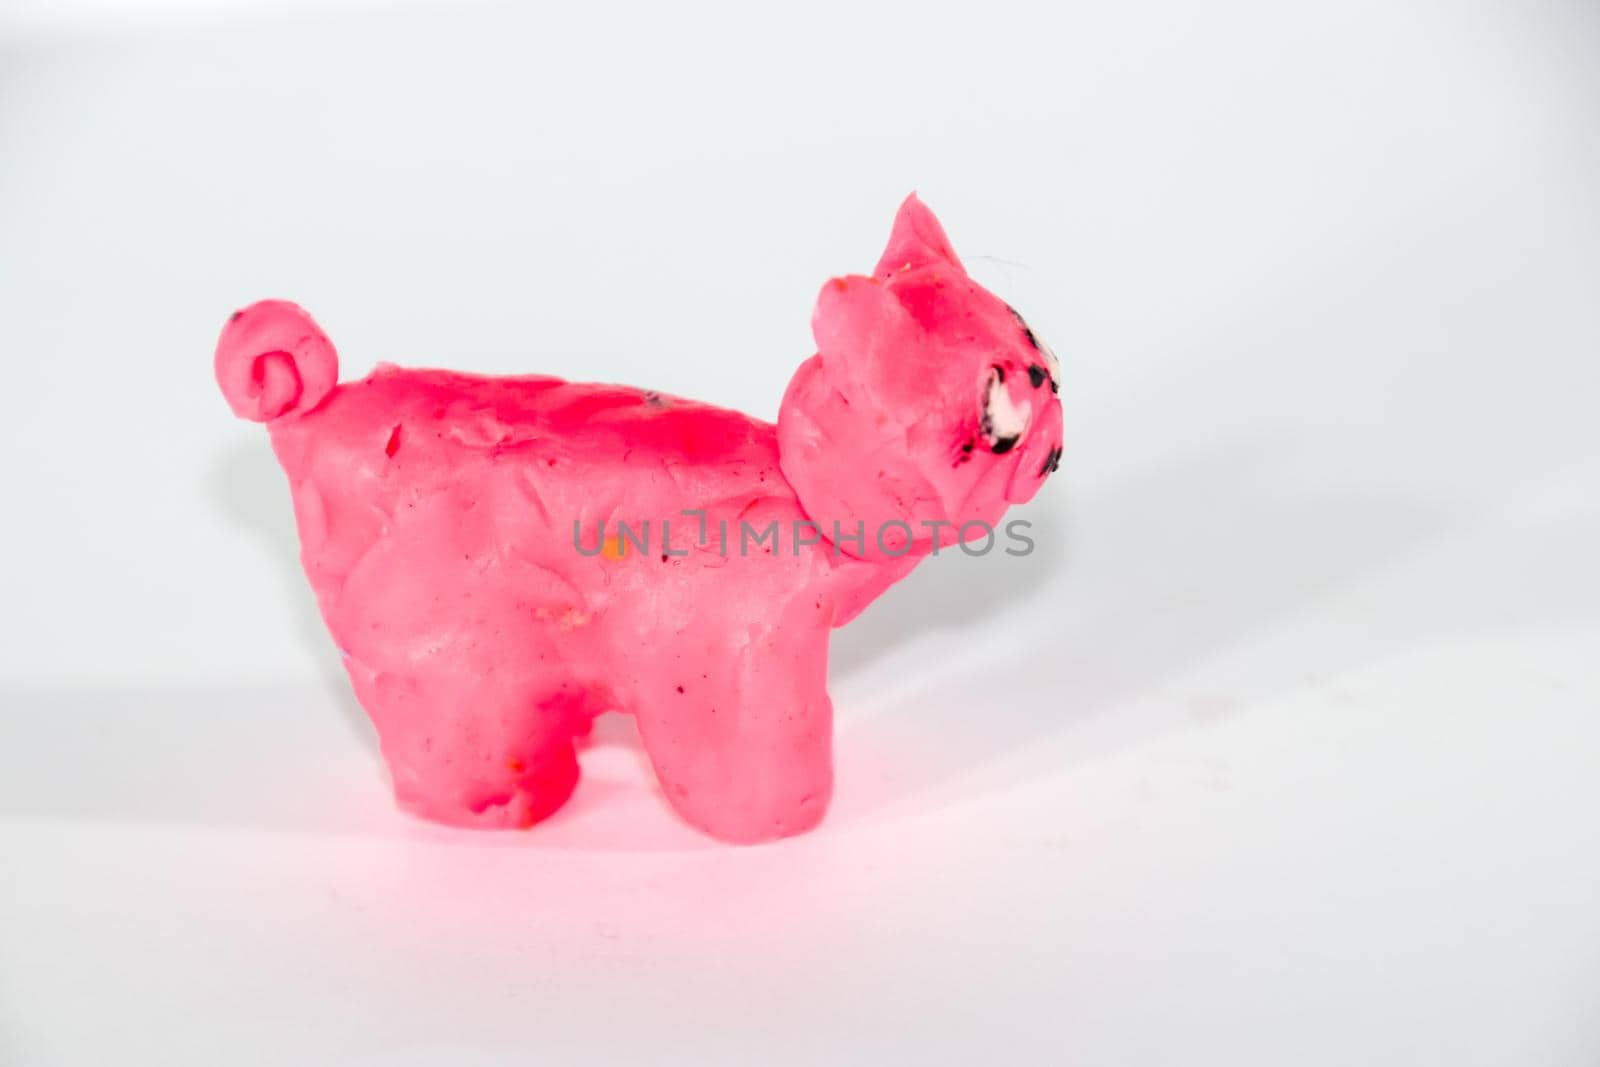 Plasticine piglet. Toys made of plasticine on white background. by eleonimages